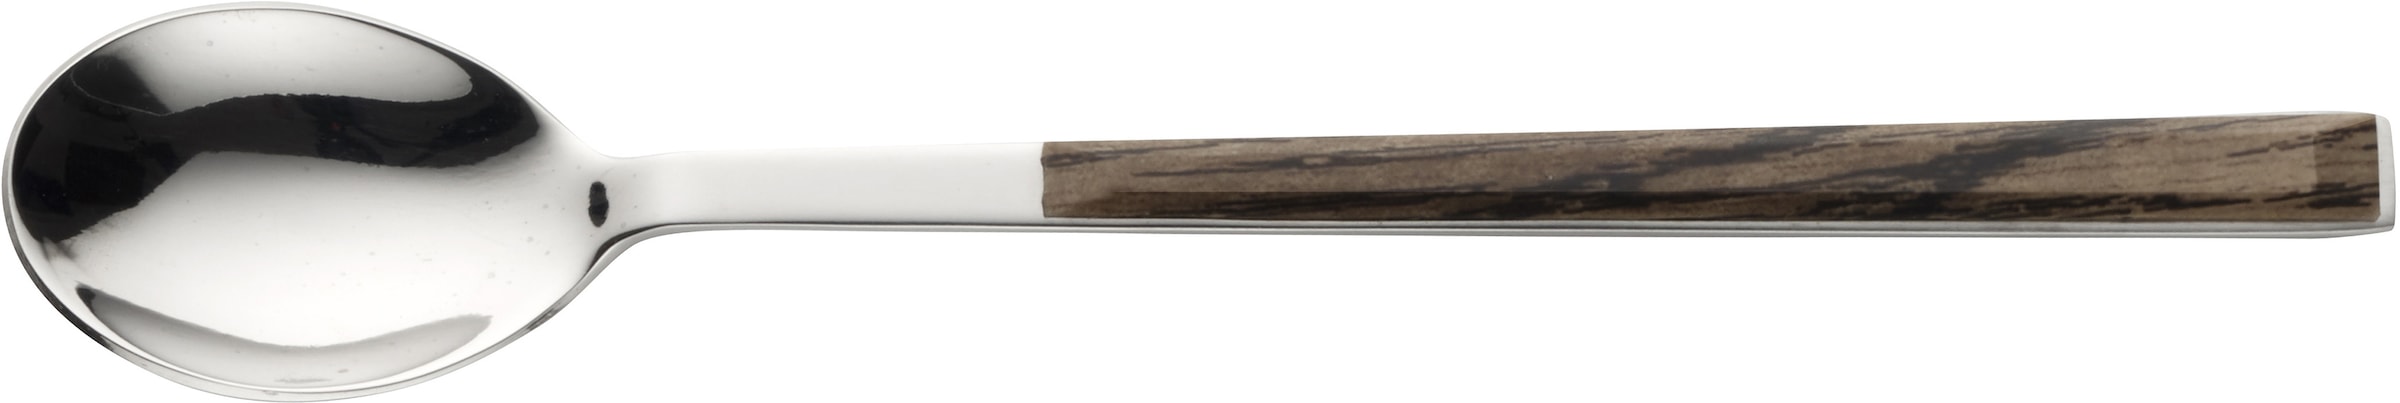 PINTINOX Besteck-Set »Sushi«, (Set, 24 tlg.), mit Kunststoffgriff in Holz-Optik